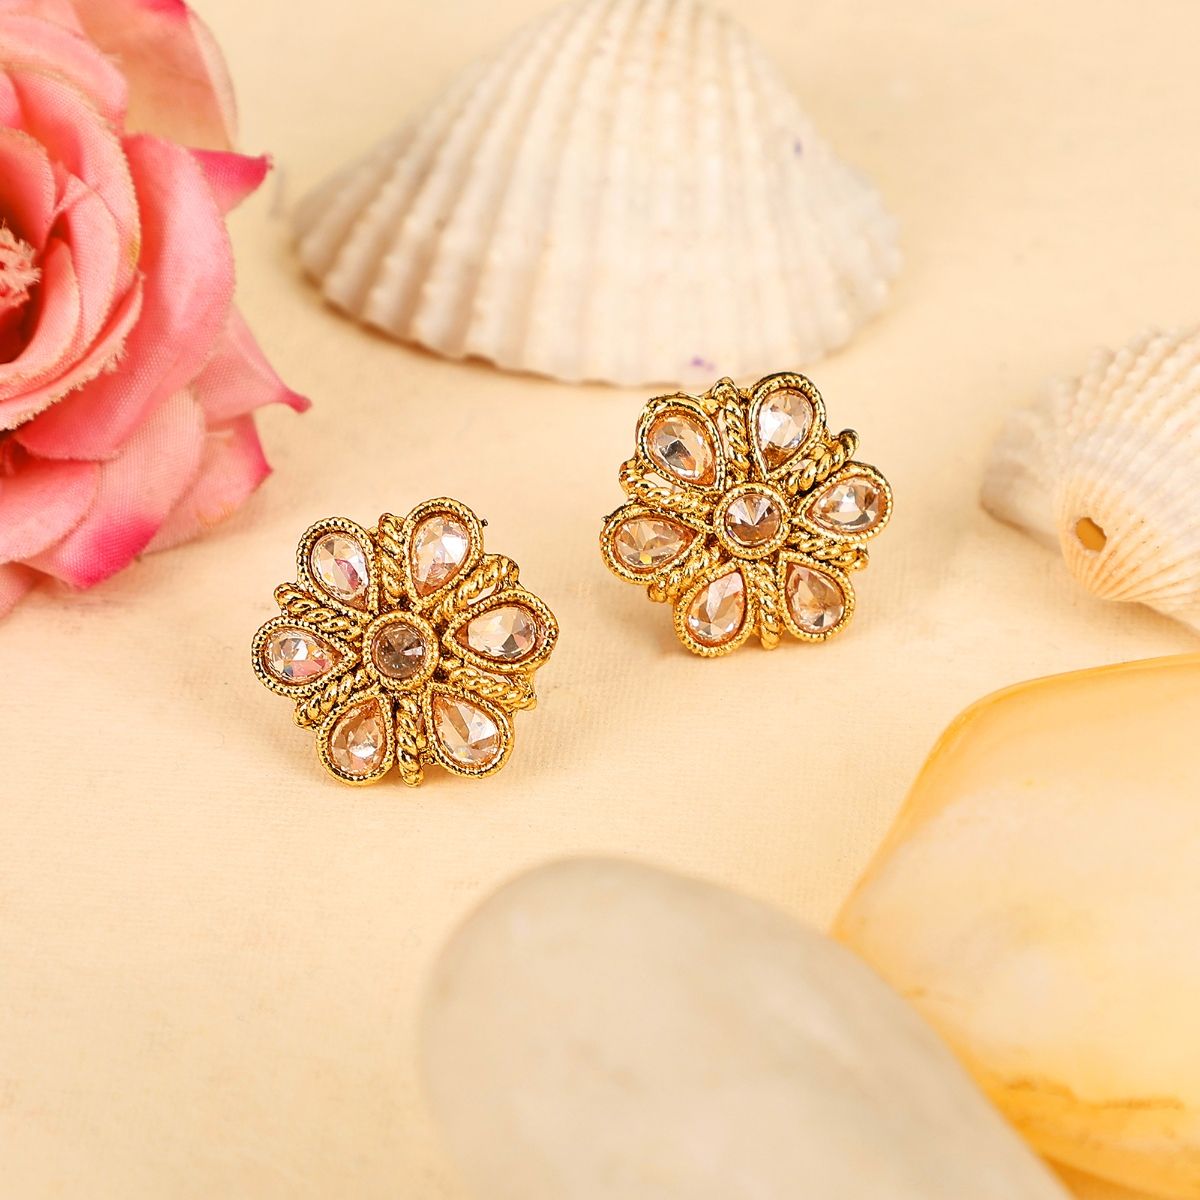 Chandbali earrings online with cz stones big ruby stone design  Swarnakshi  Jewelry